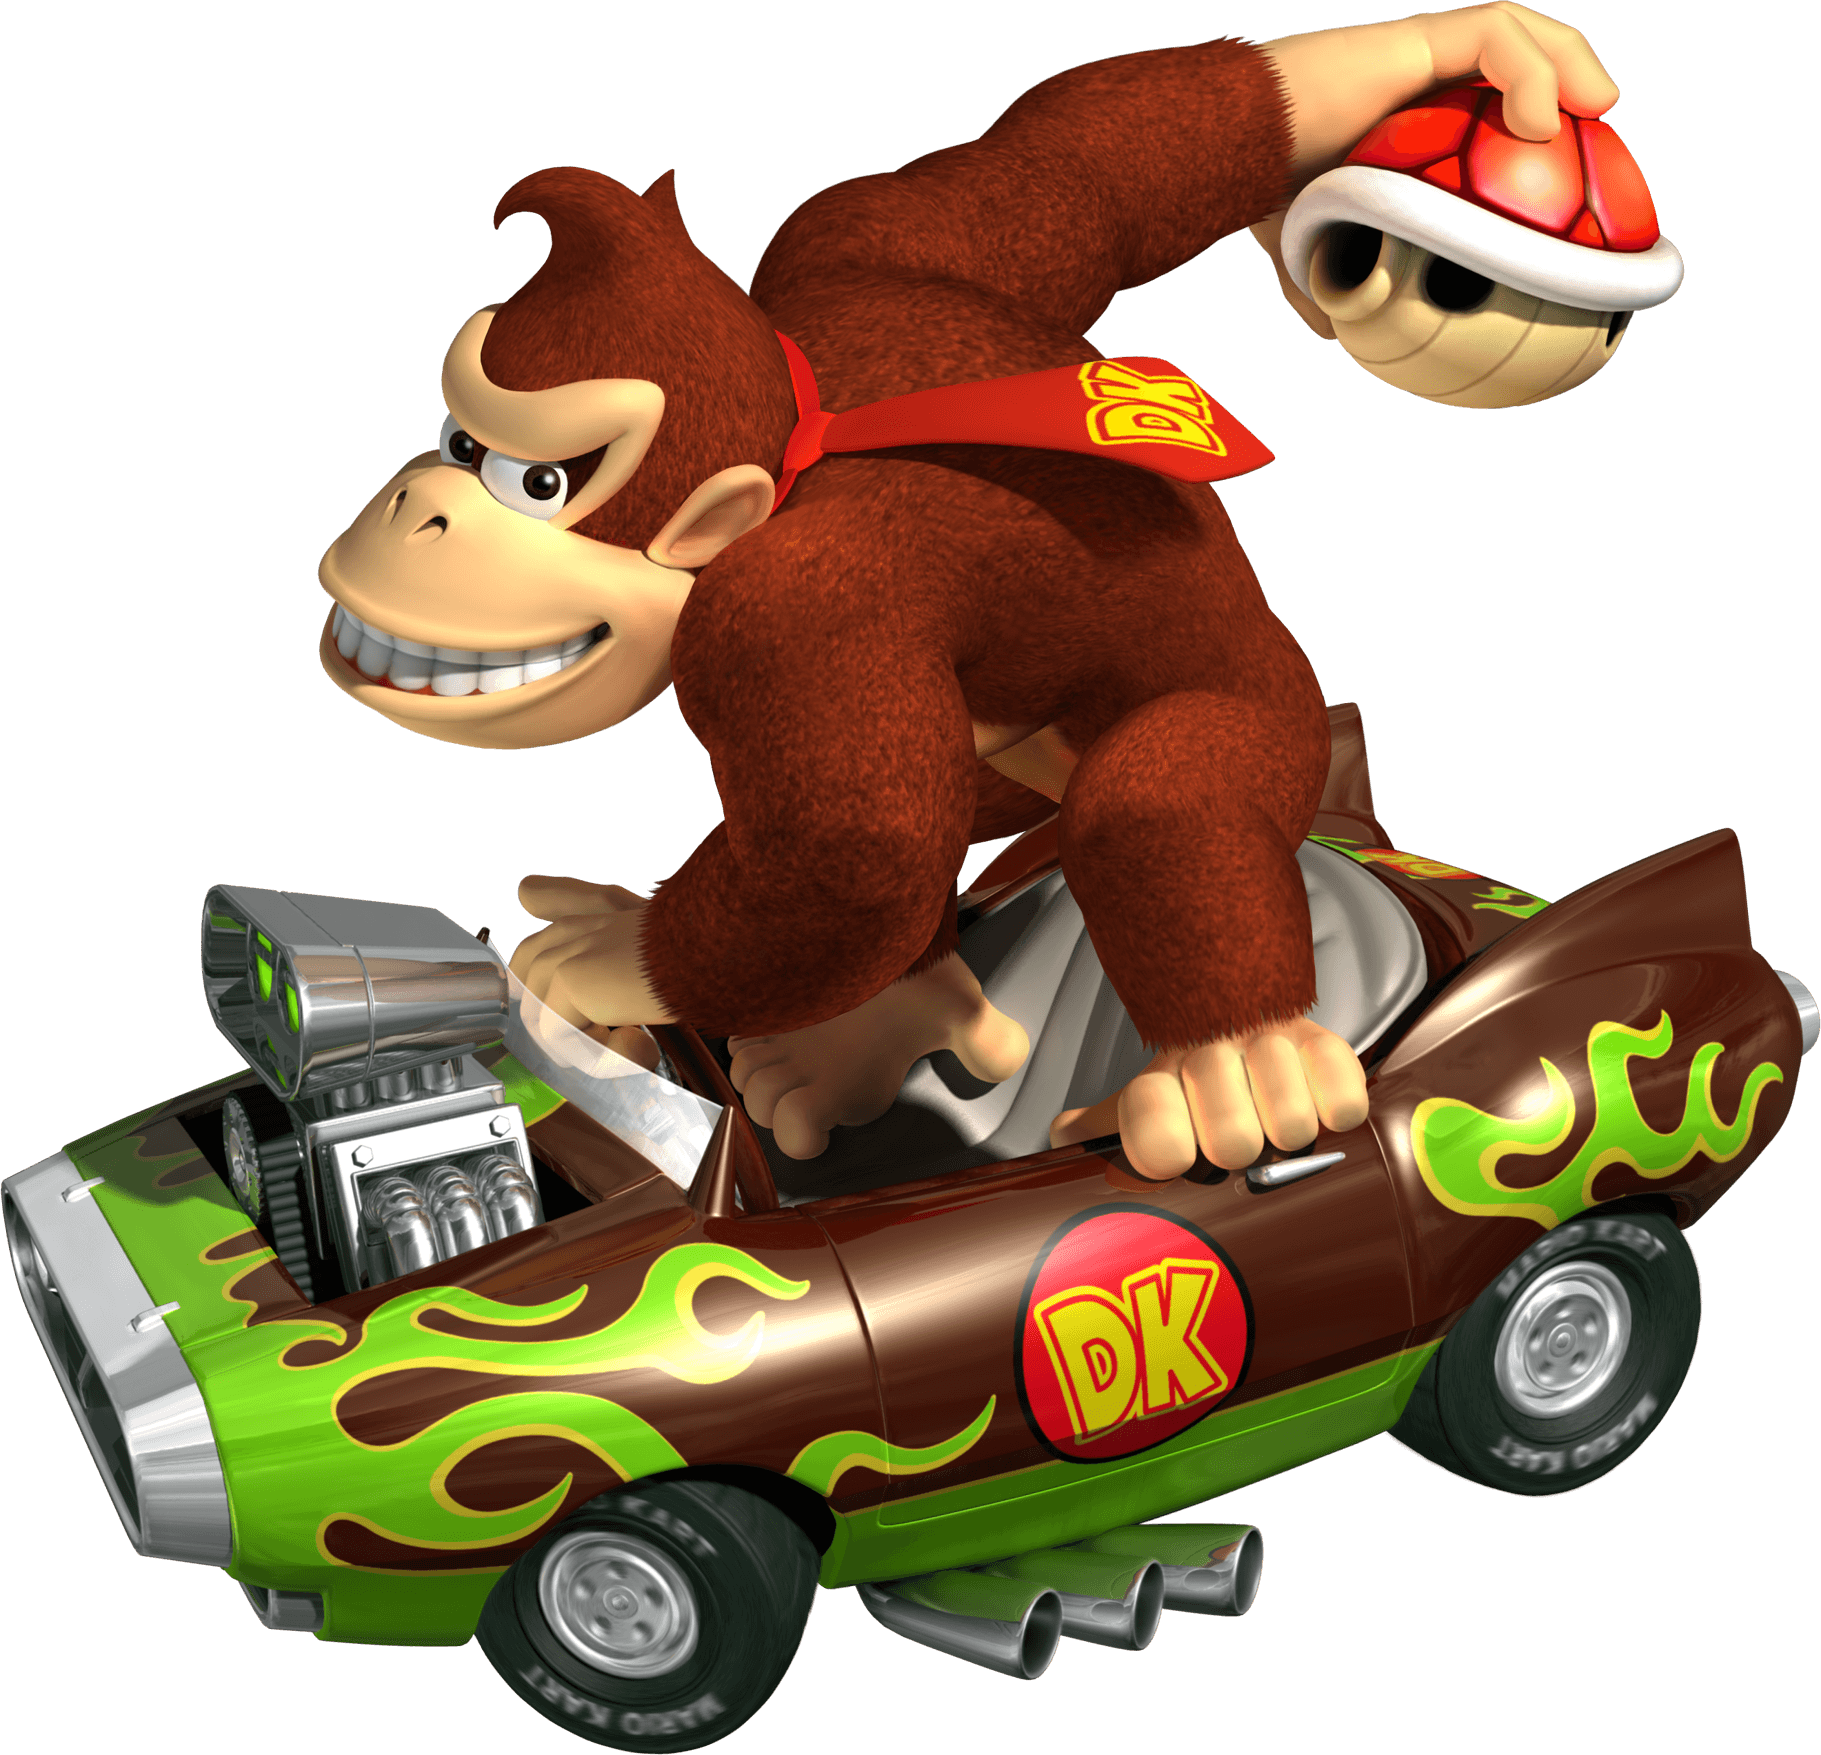 Mario Kart Wii Characters